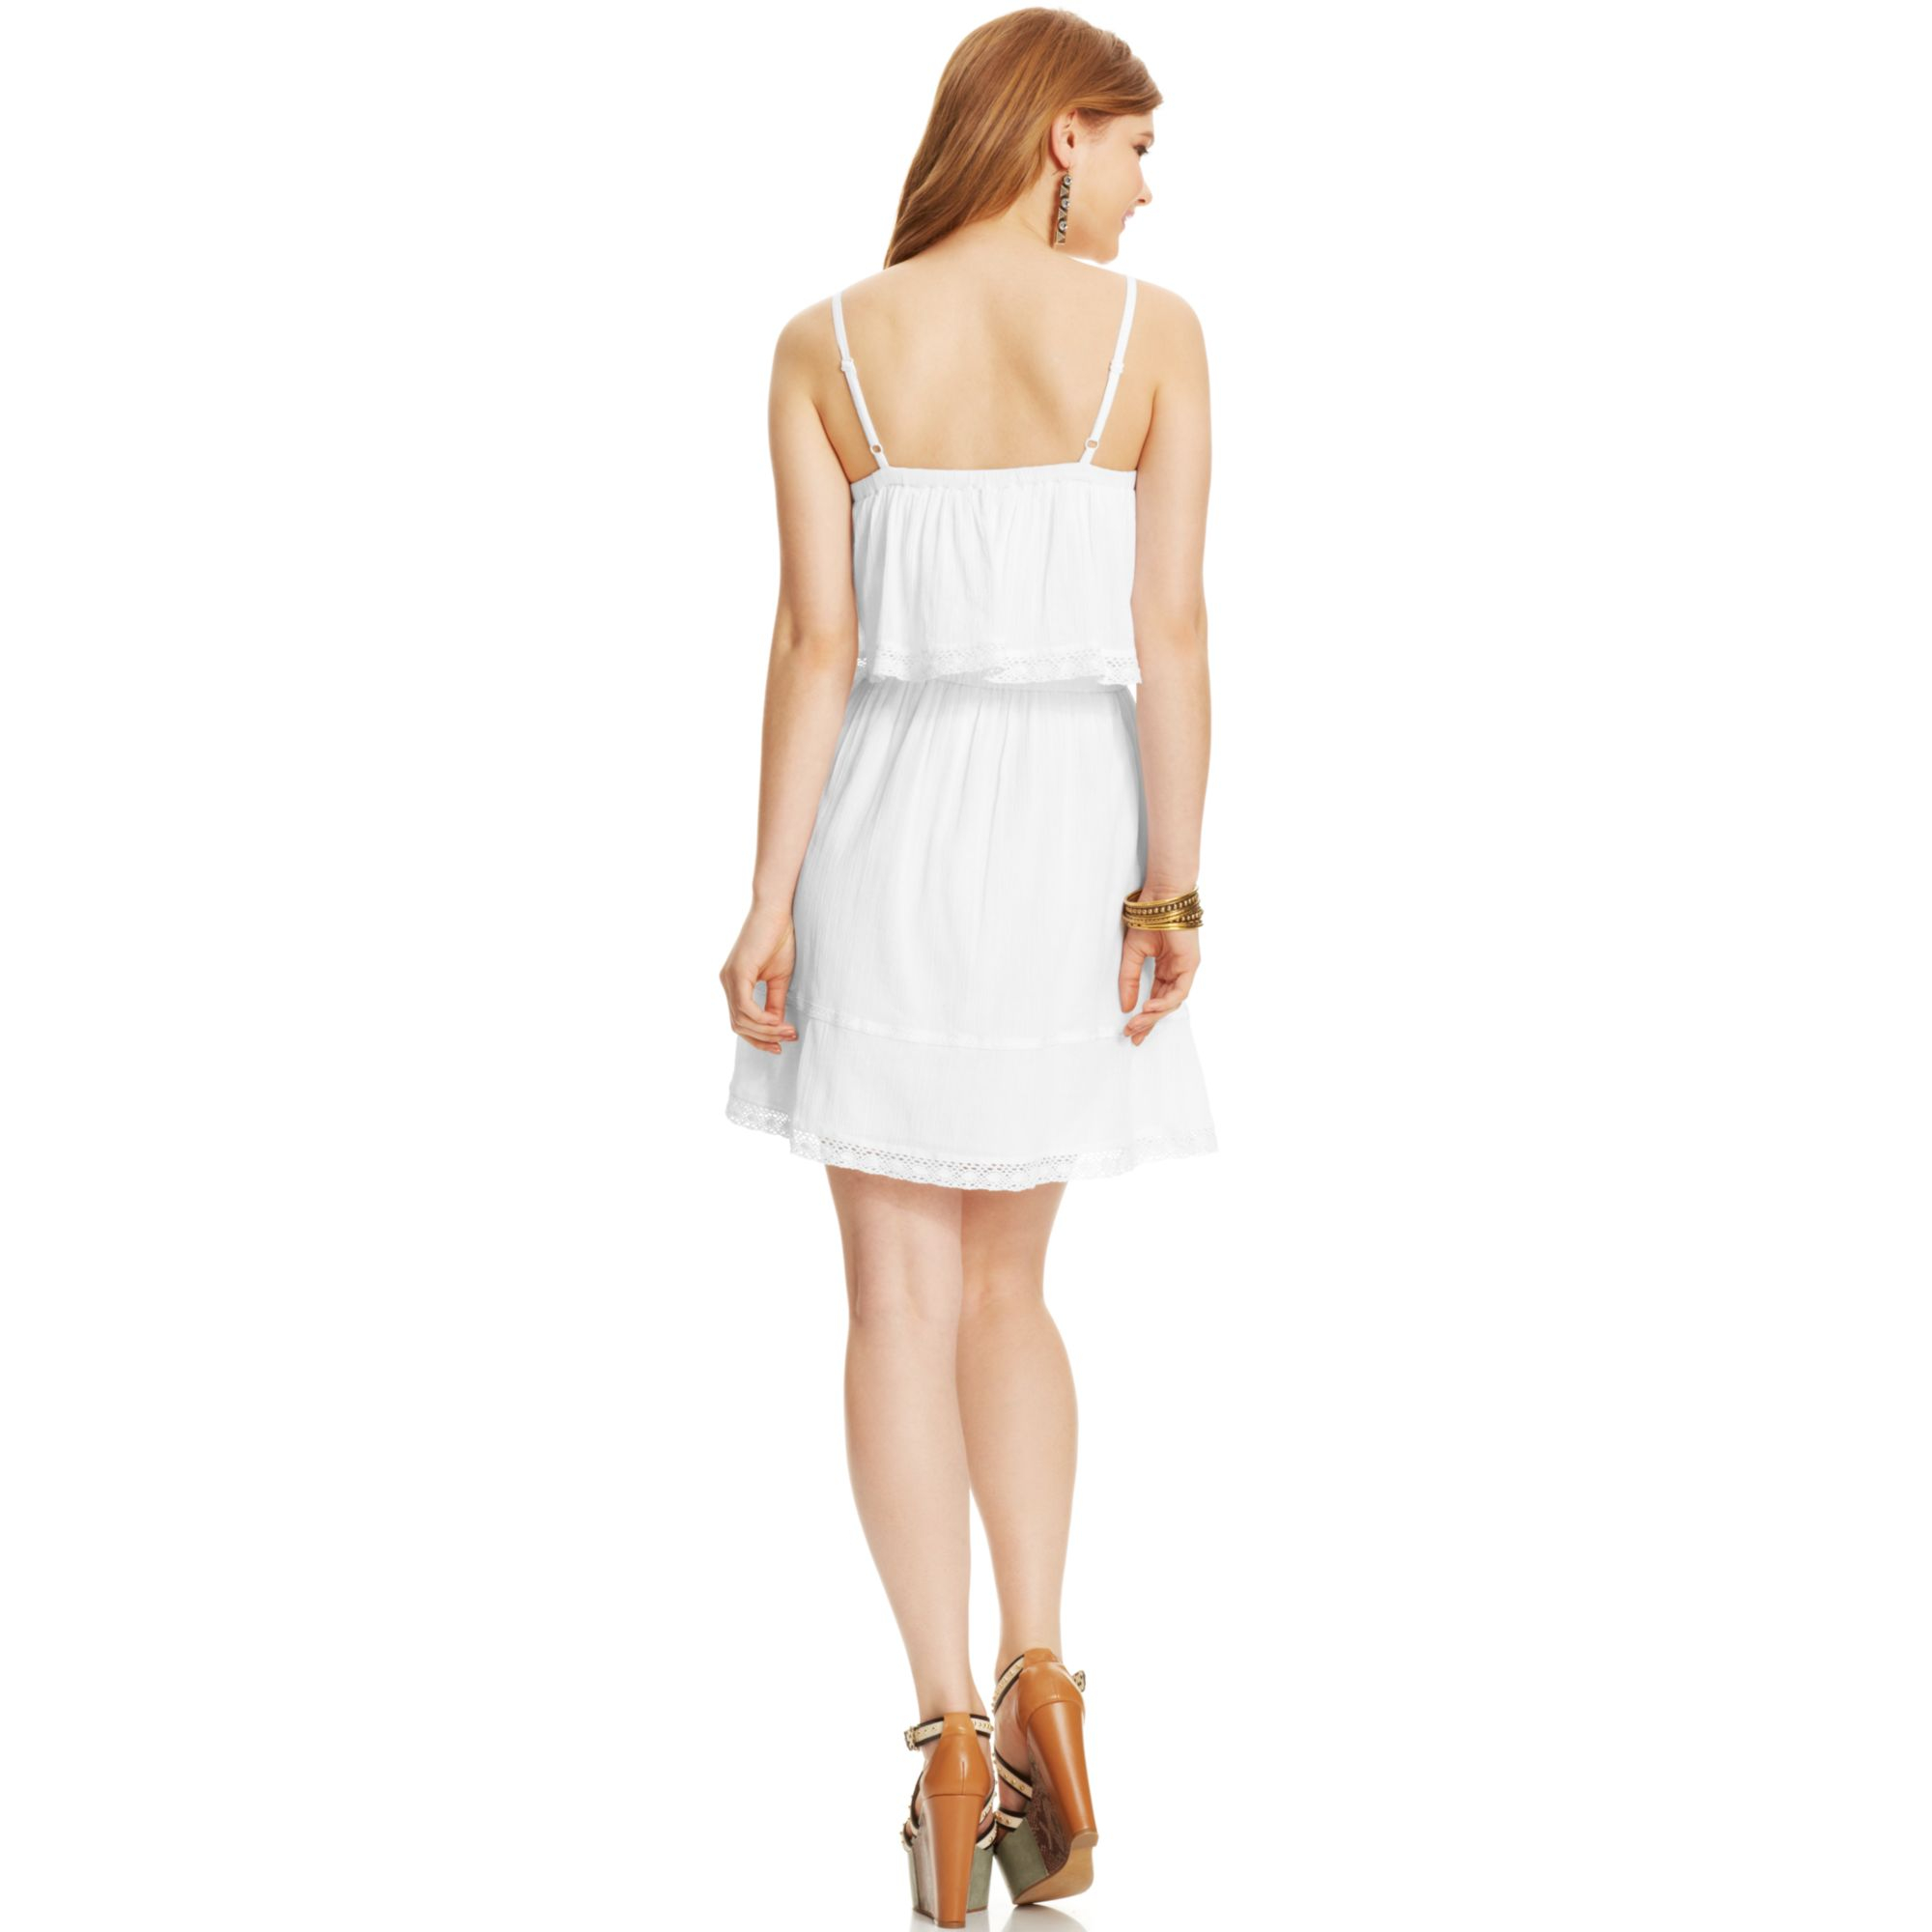 Lyst - Jessica Simpson Francois Ruffled Crochet Knit Trim Dress in White